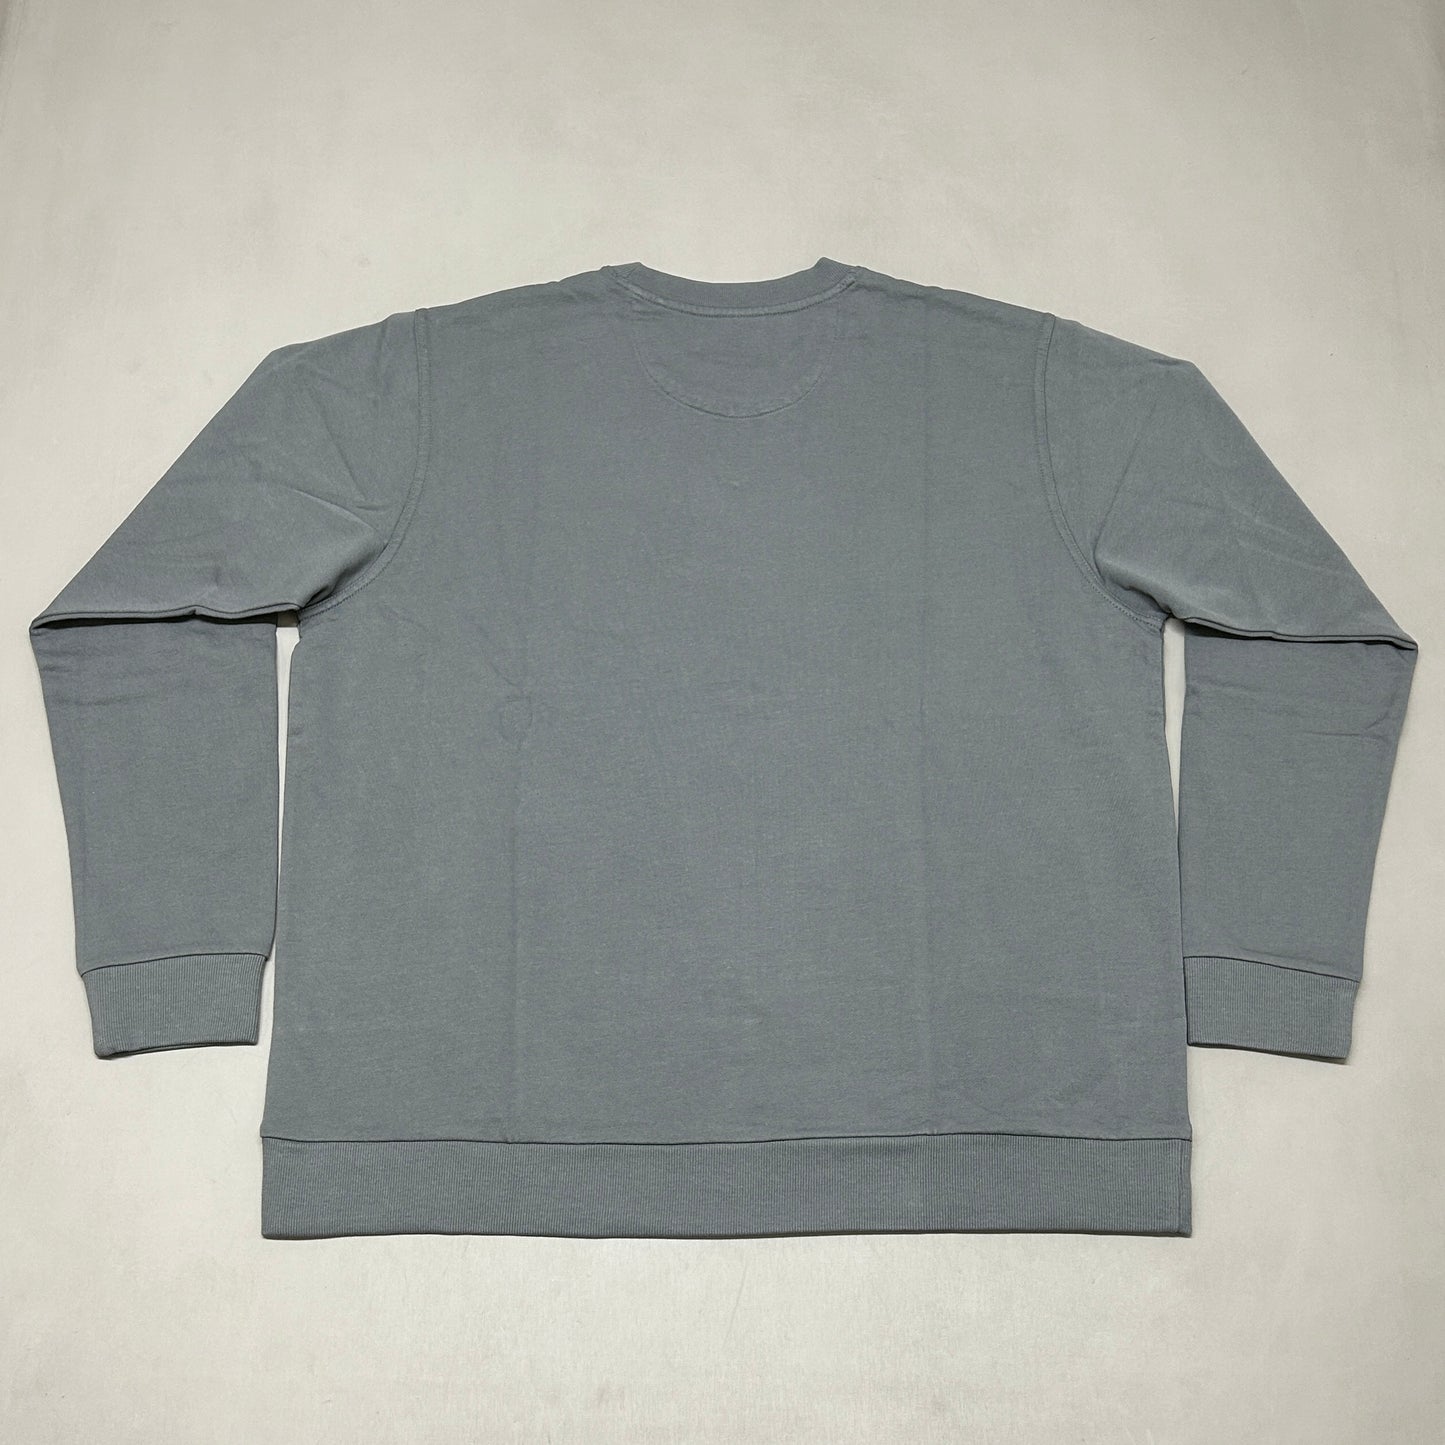 PATAGONIA Regenerative Organic Cotton Crewneck Sweatshirt Sz L Noble Grey (New)